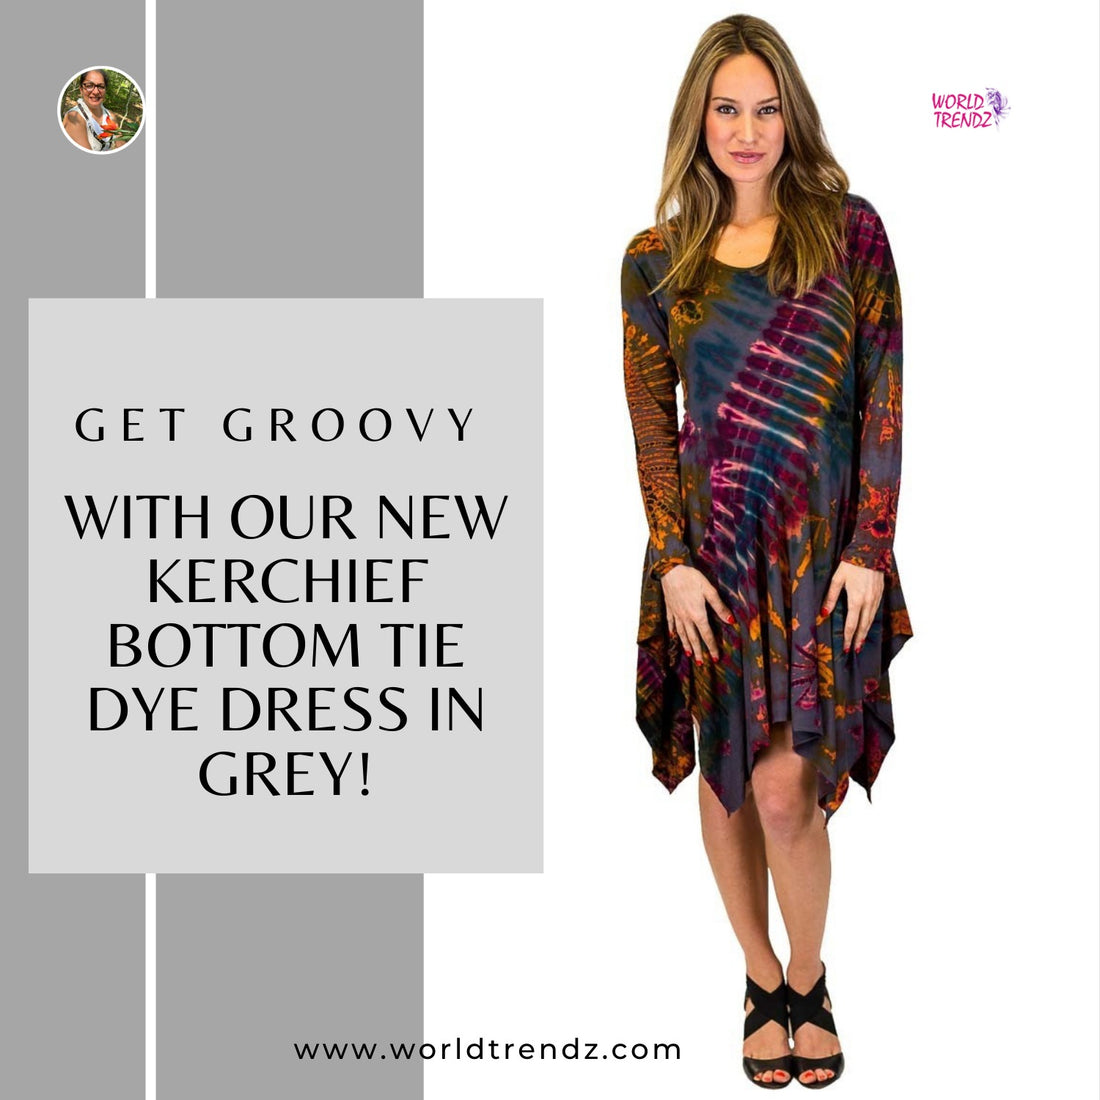 The Trendy Transformation: Embrace the Kerchief Bottom Tie Dye Dress in Grey!